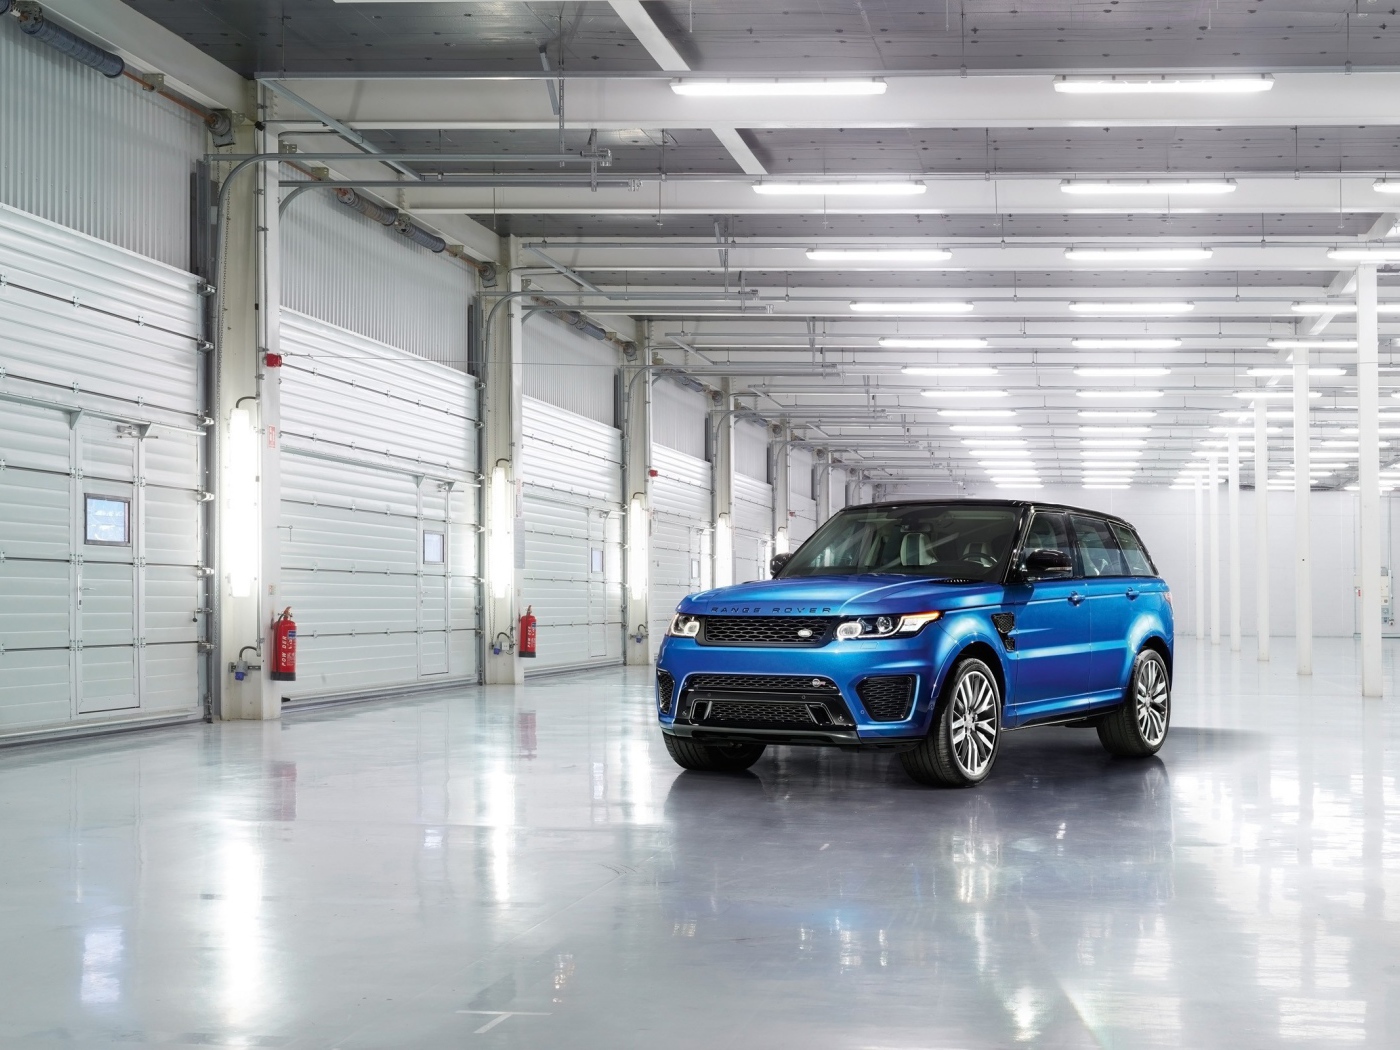 Голубой Range Rover в гараже